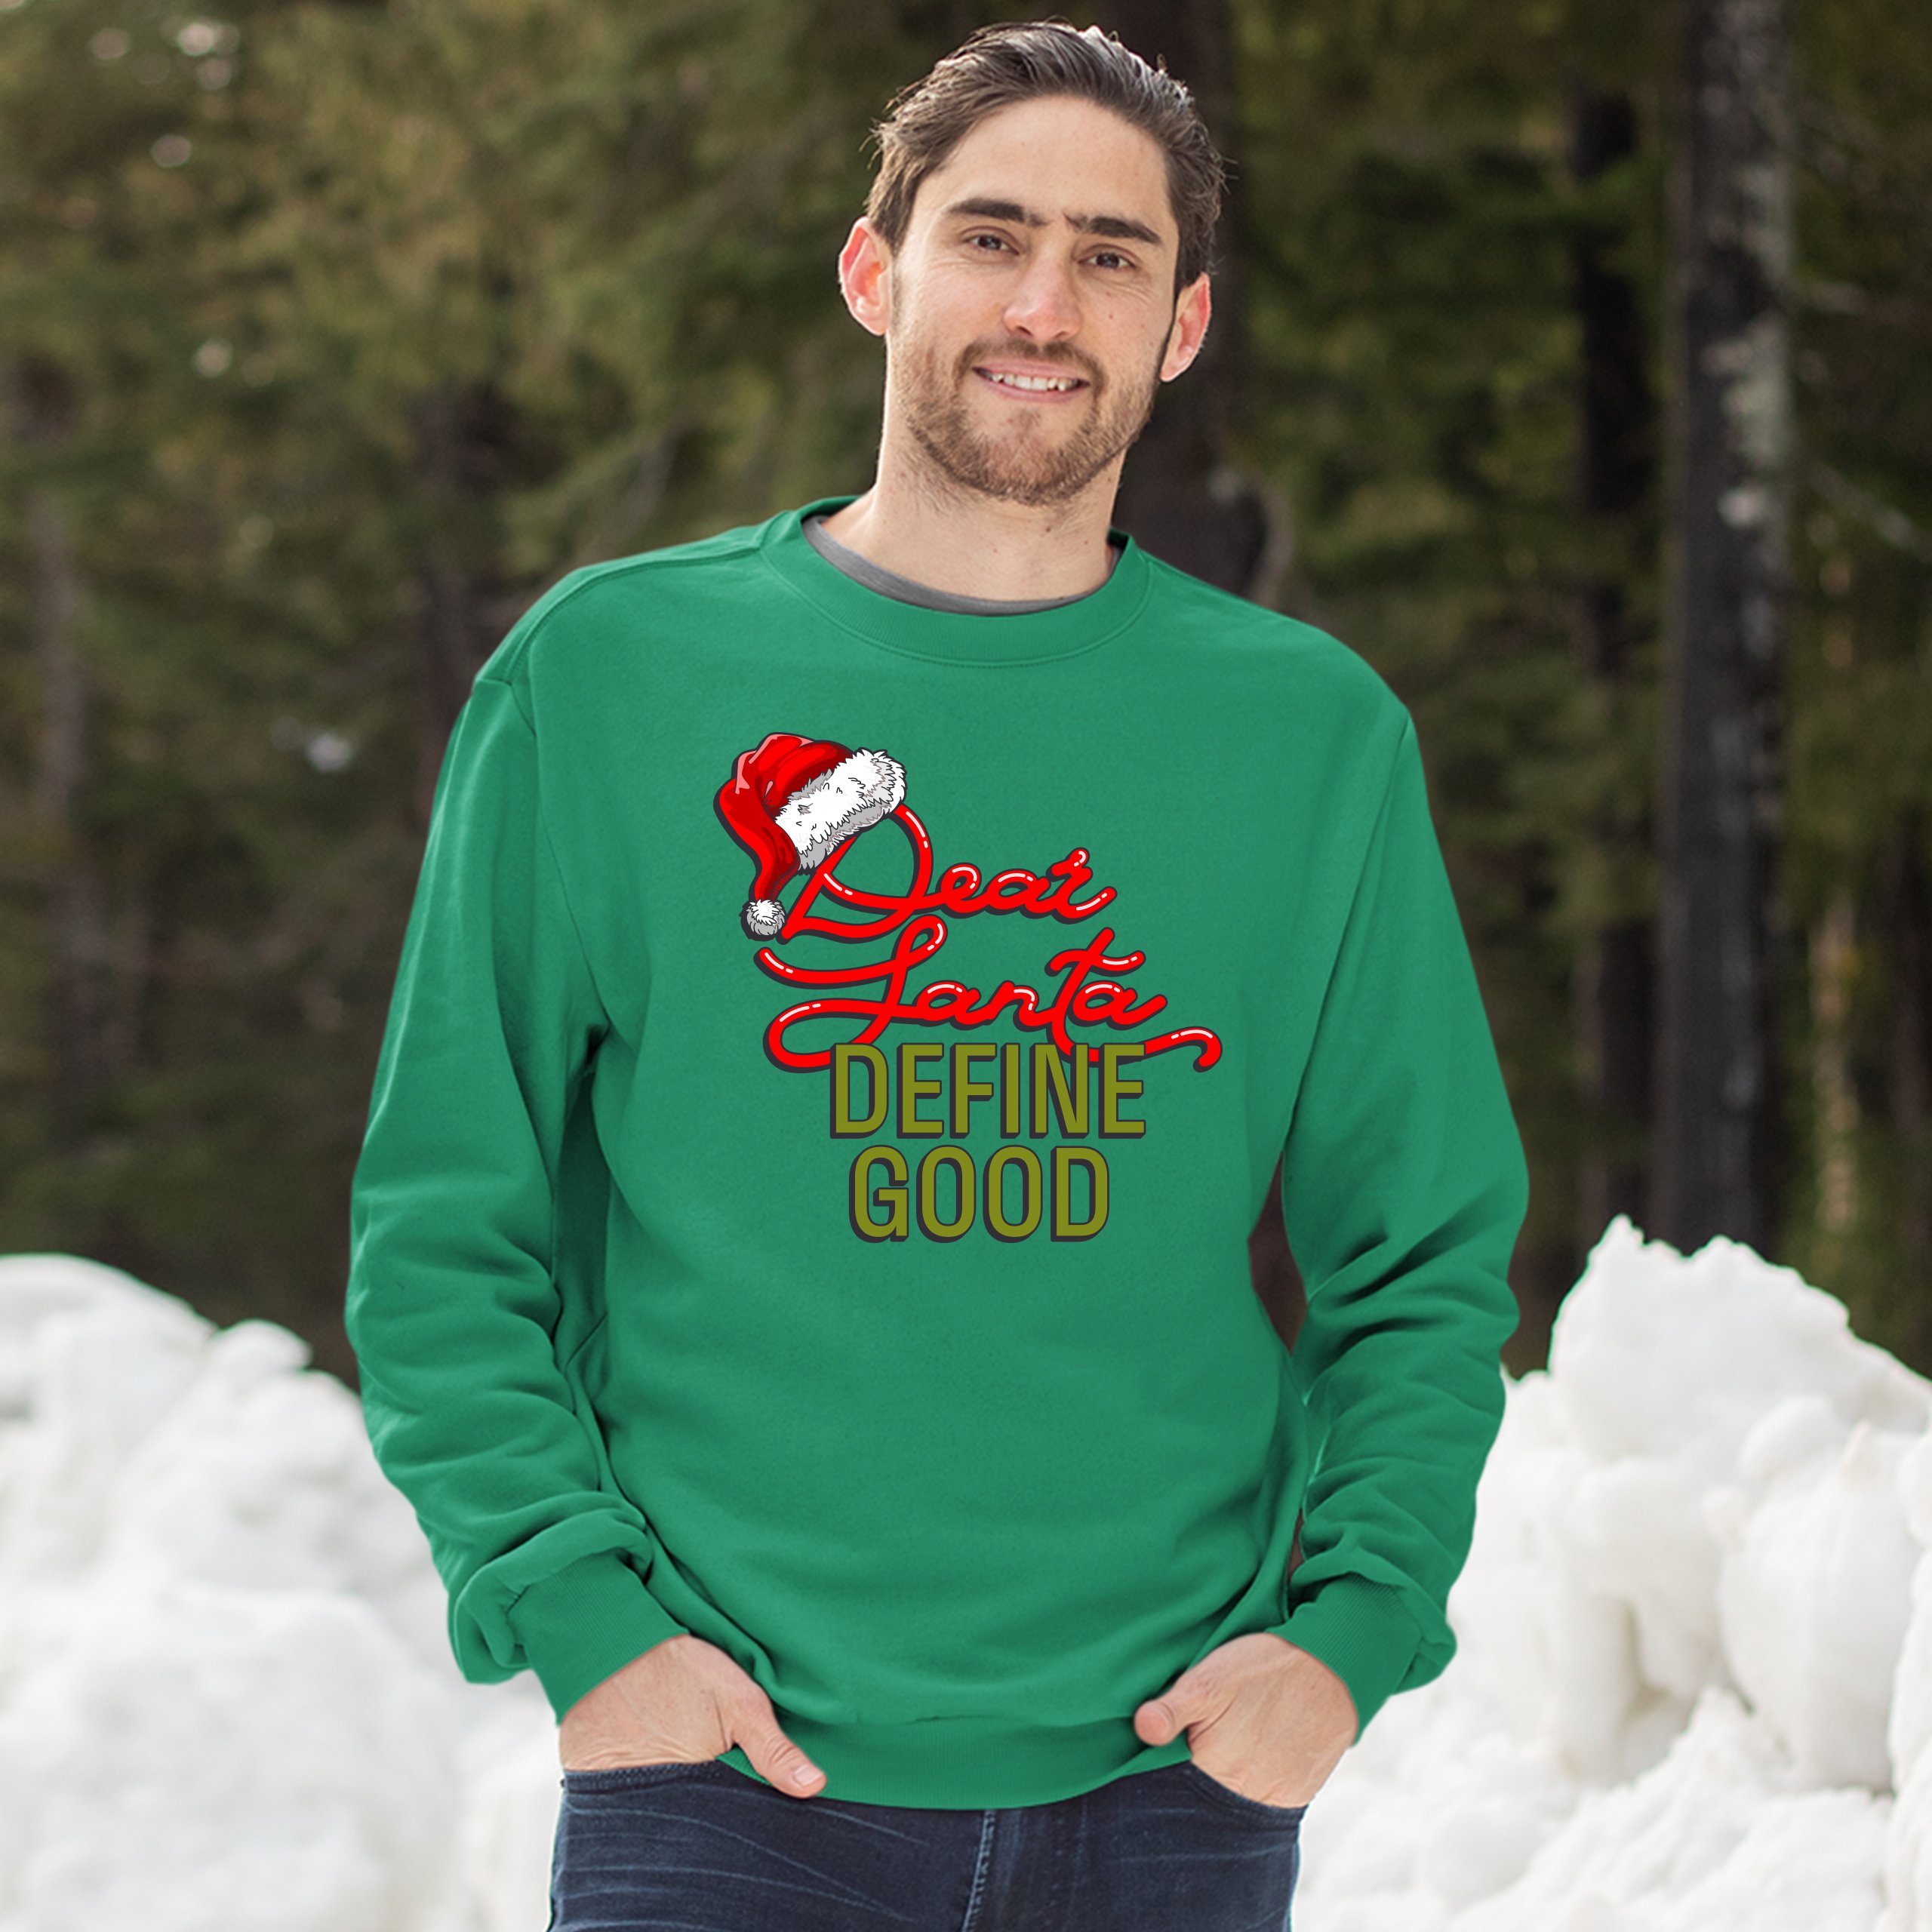 Merry Christmas Cool Santa Crewneck Sweatshirt